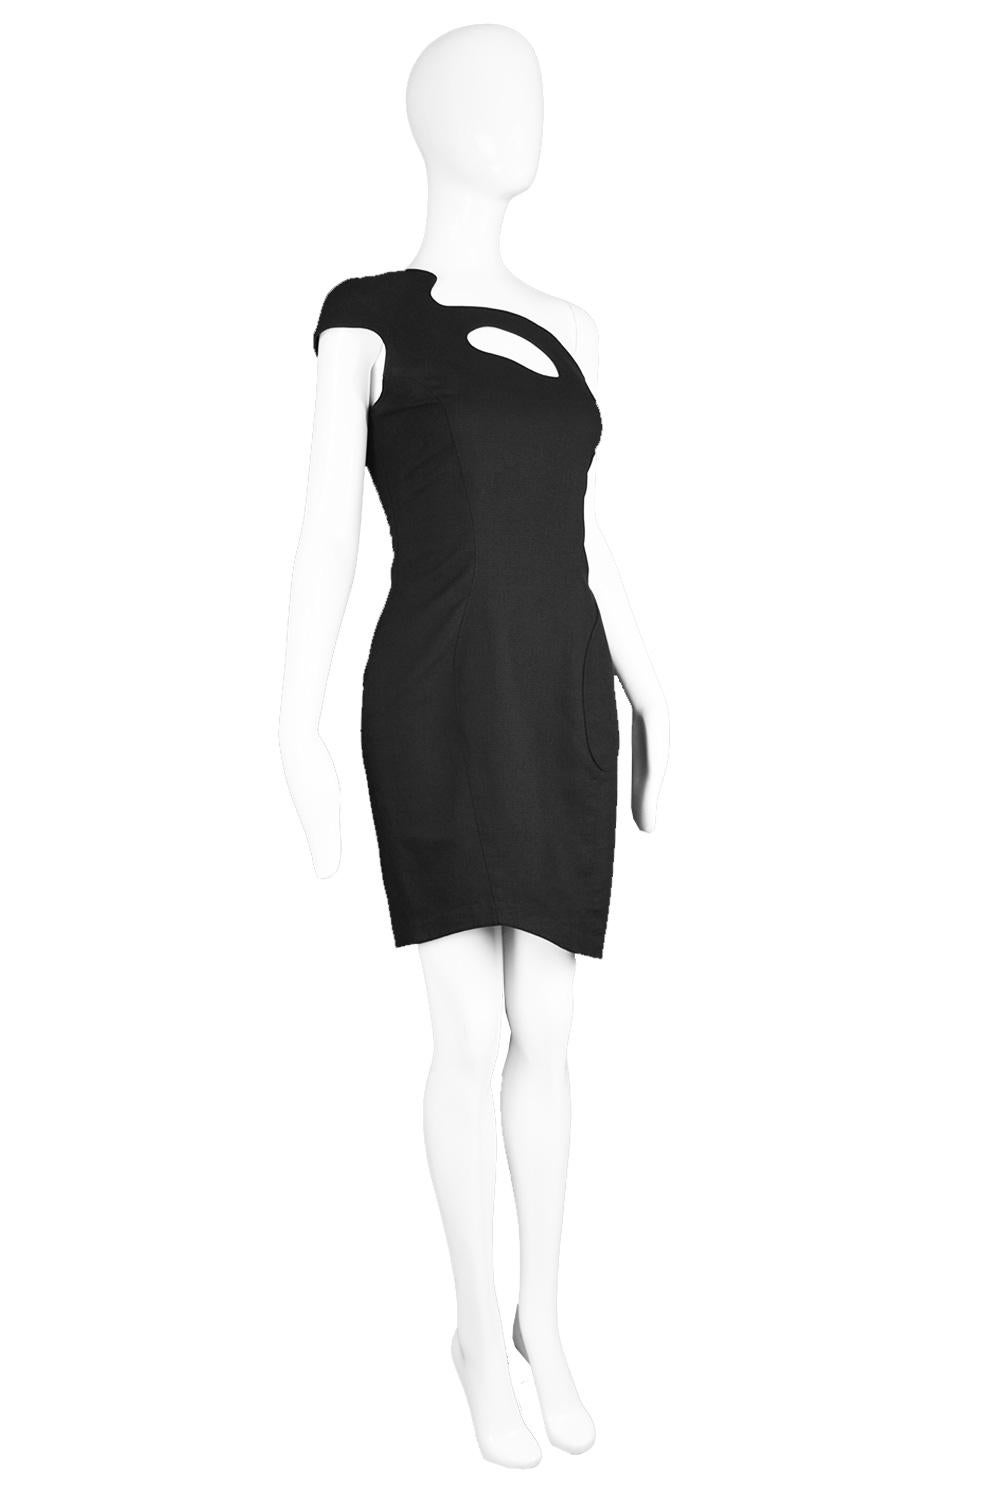 Thierry Mugler Sculptural One Shoulder Vintage Black Cotton Party Dress, 1980s For Sale 3